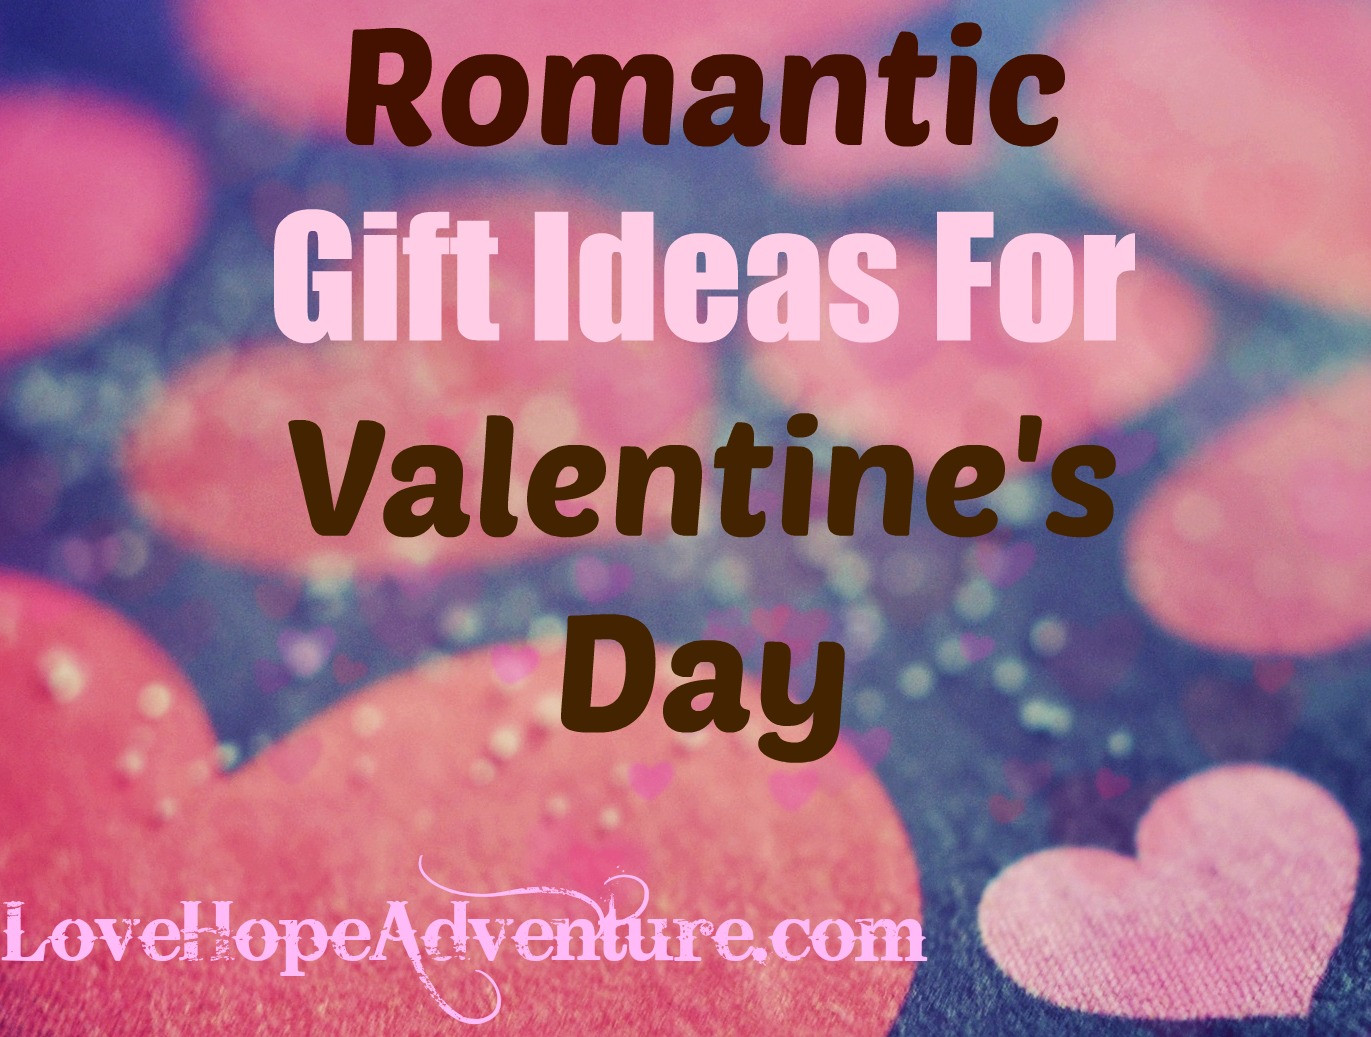 Romantic Valentine Day Gift Ideas
 Fun and Romantic Gift Ideas for Valentine s Day